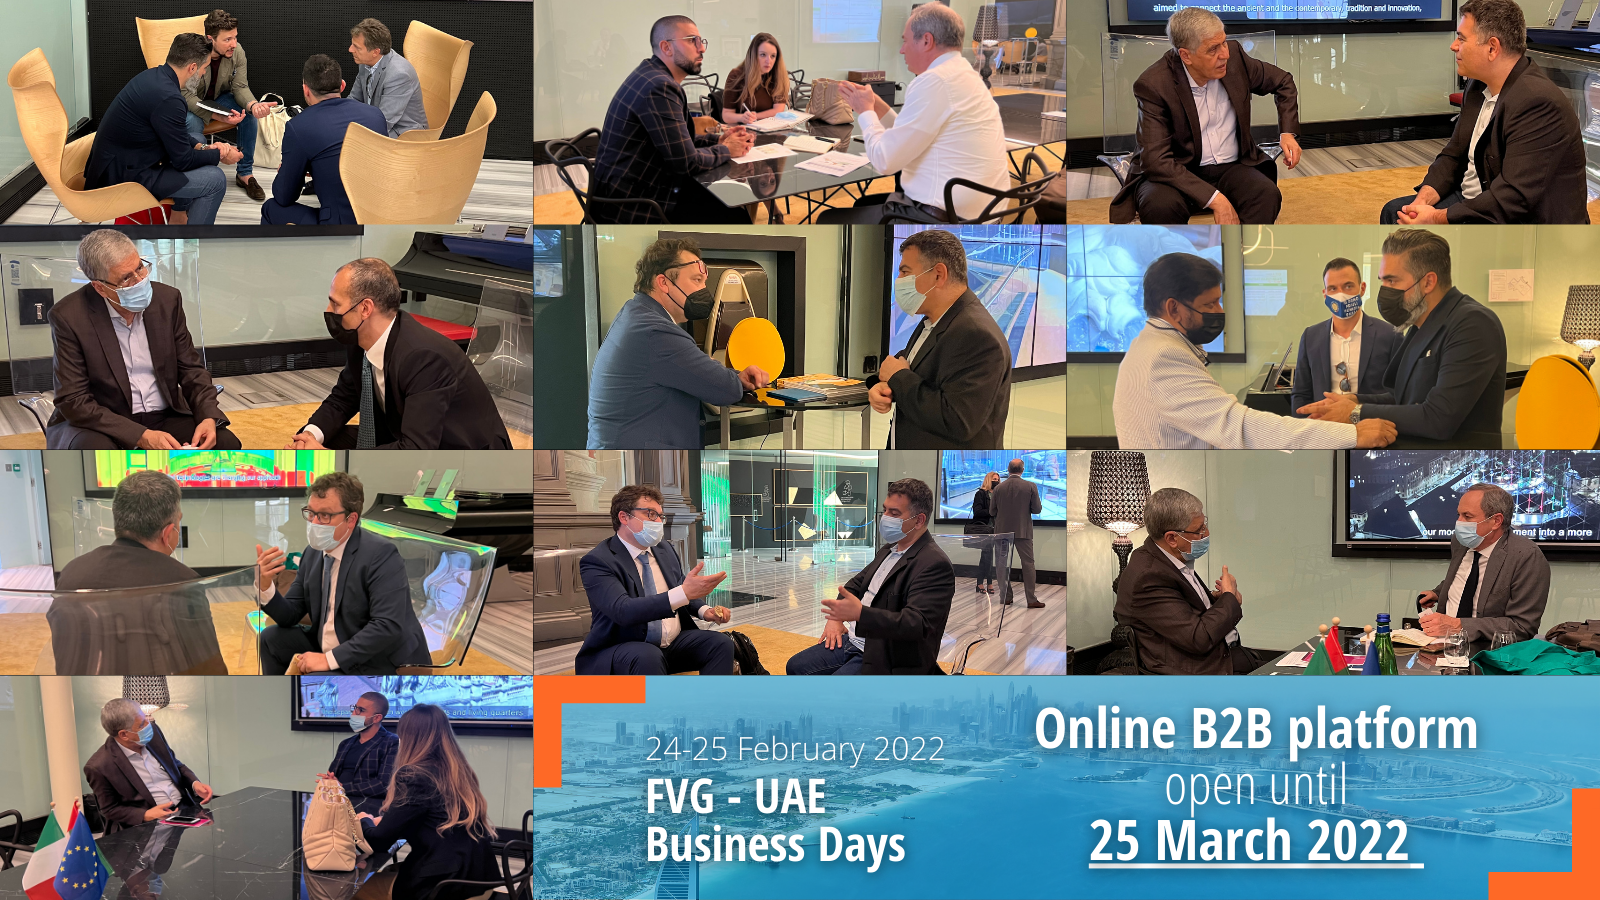 FVG - UAE Business Days